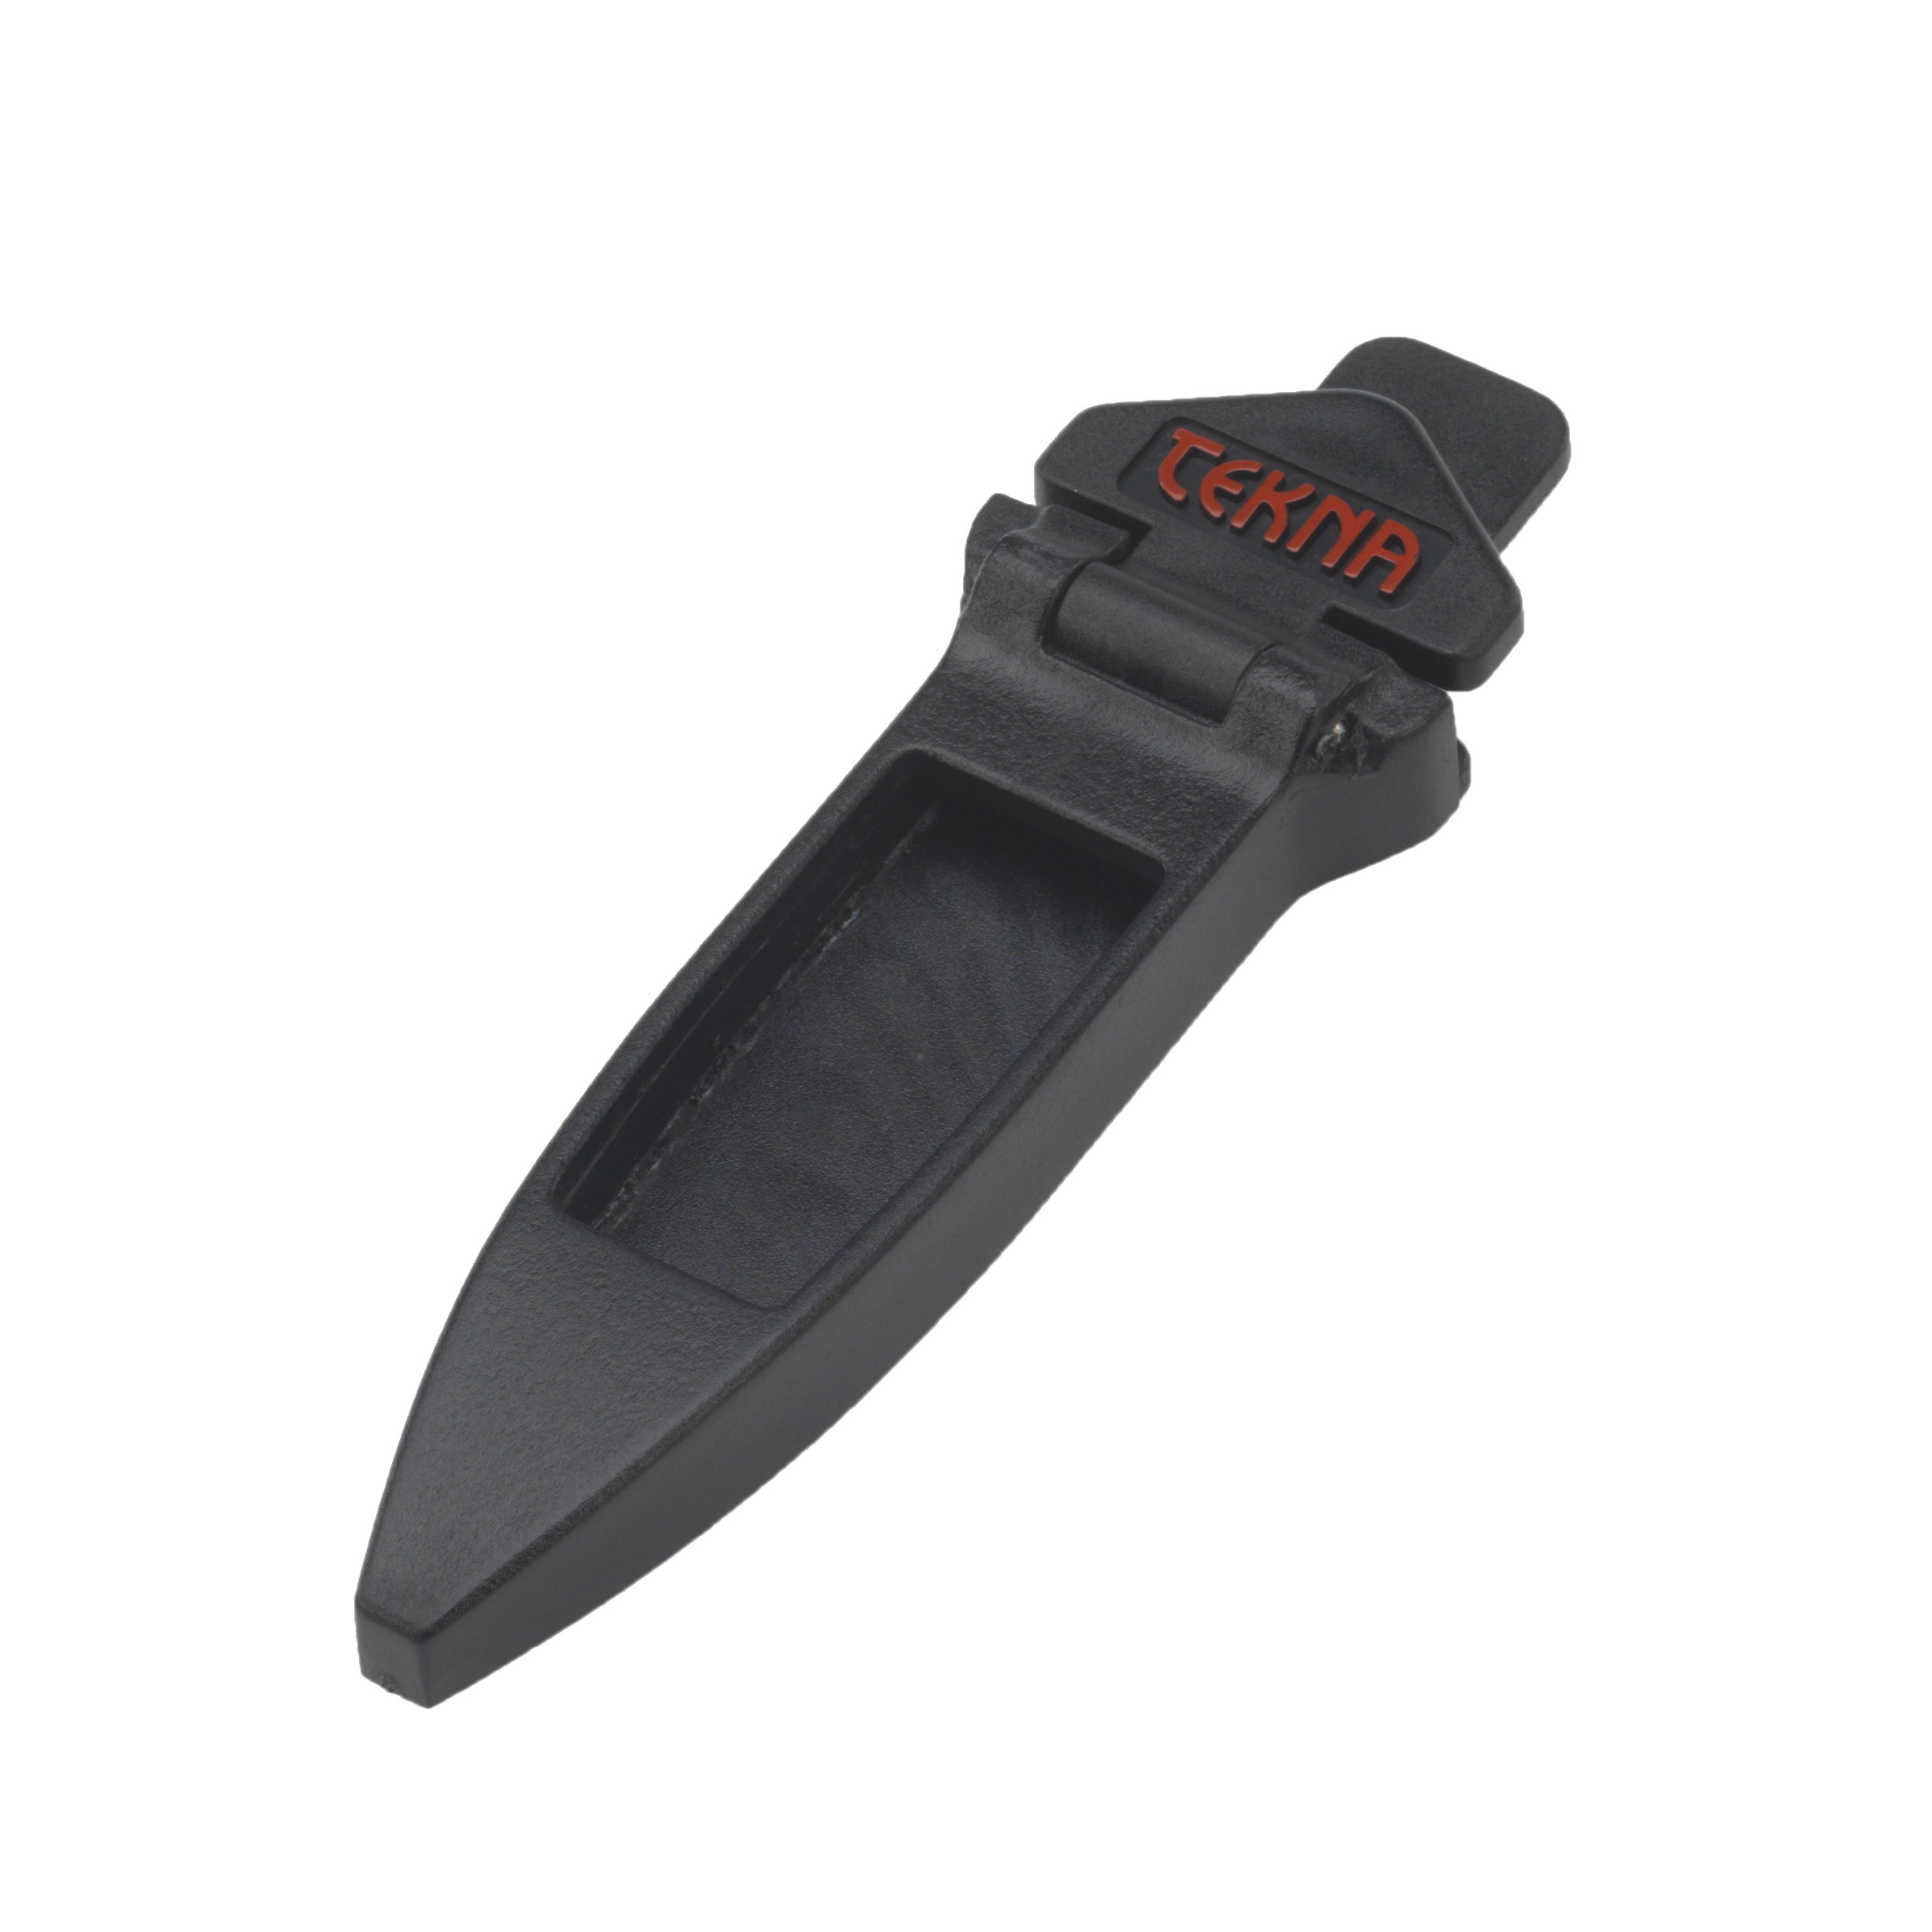 TEKNA Knives Ocean Edge Fixed Dive Knife 3.5 Polished Double Edge  Symmetrical Dagger Blade and Skeletonized Handle, ABS Plastic Sheath -  KnifeCenter - TEK-OE-S-PS